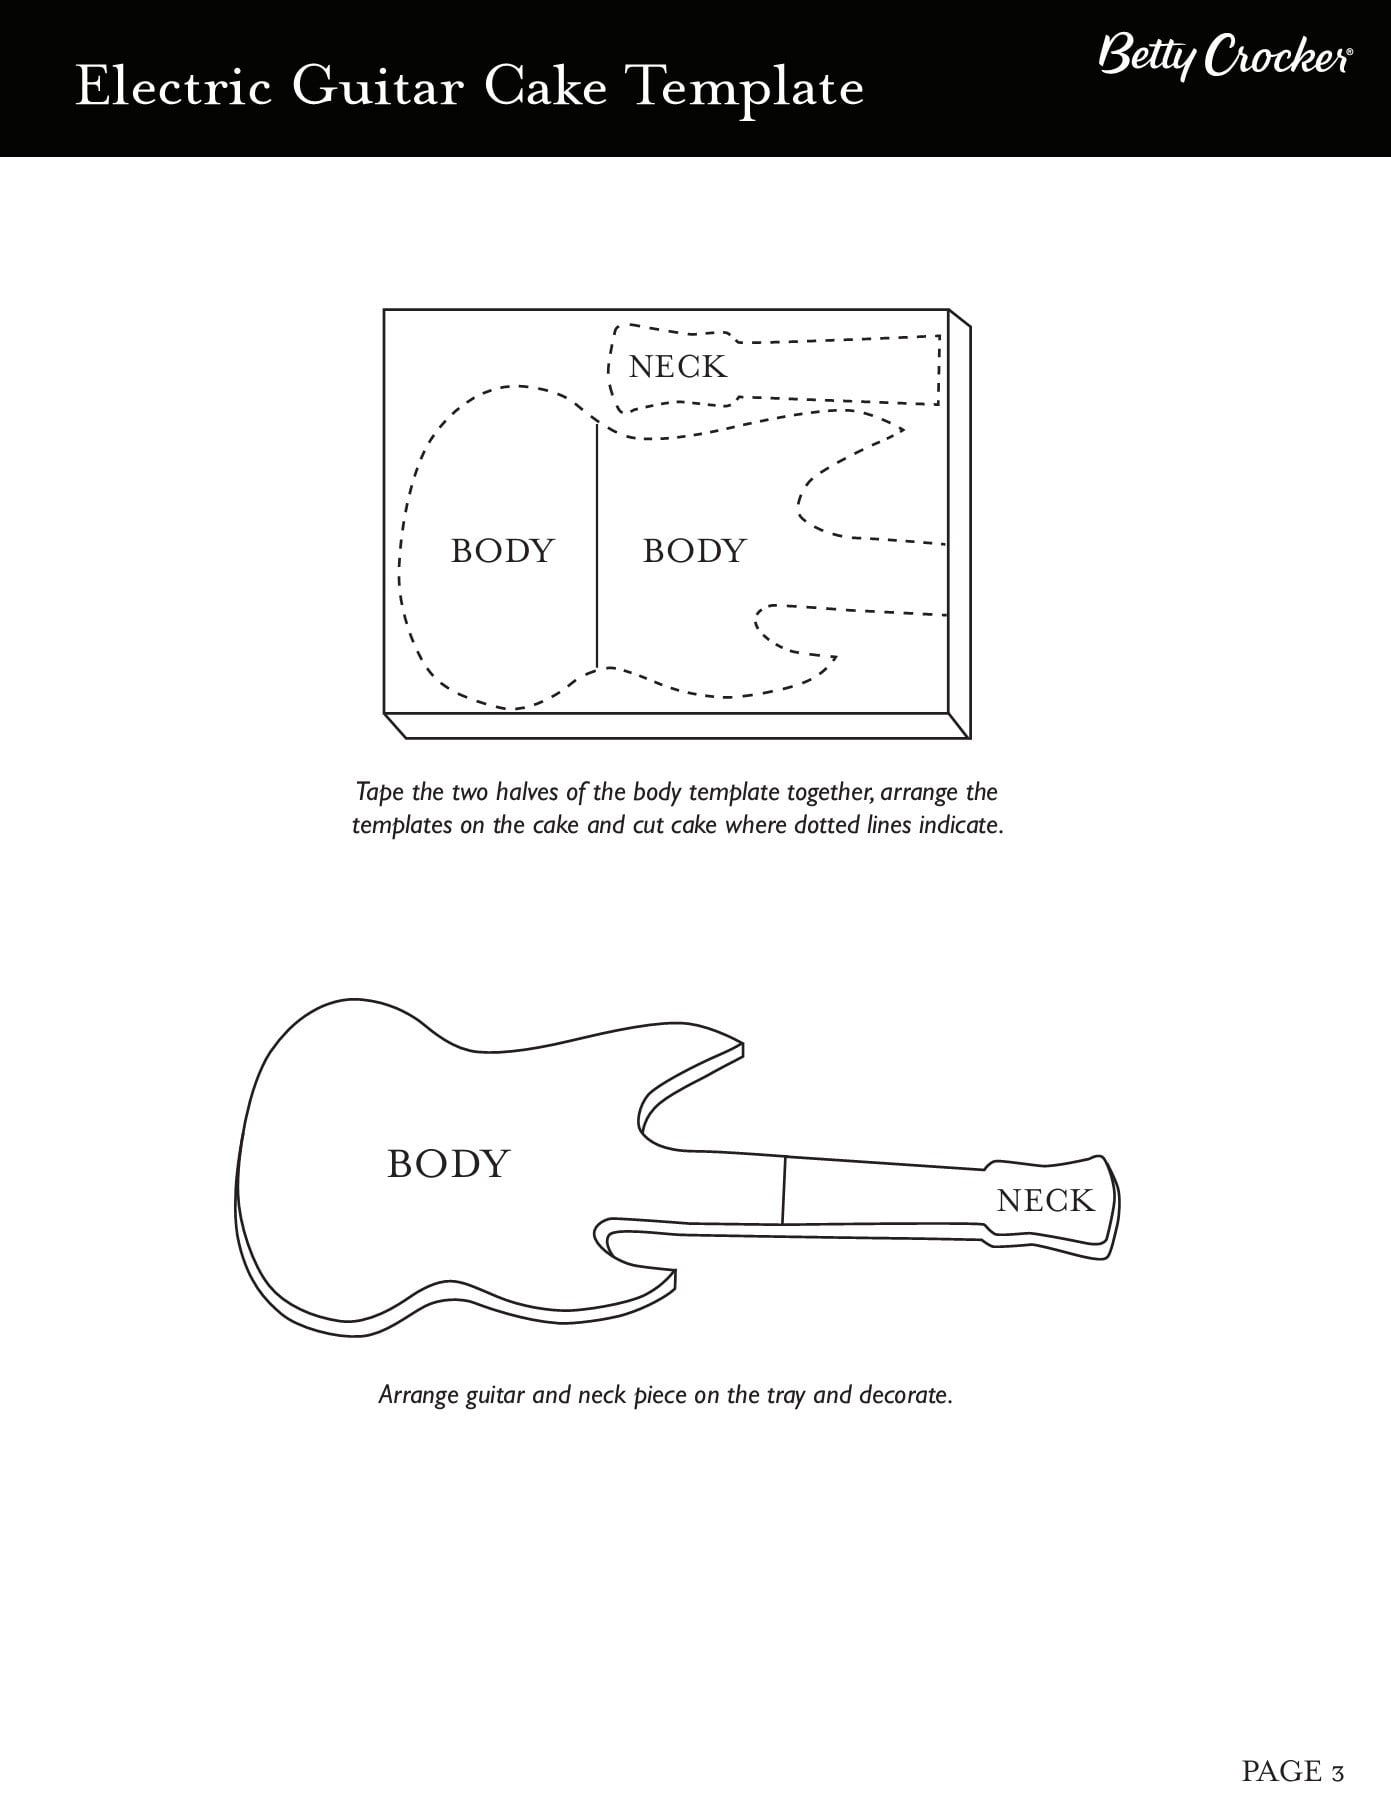 Electric Guitar Cake Template Betty Crocker Pages 1 4 Flip PDF Download FlipHTML5